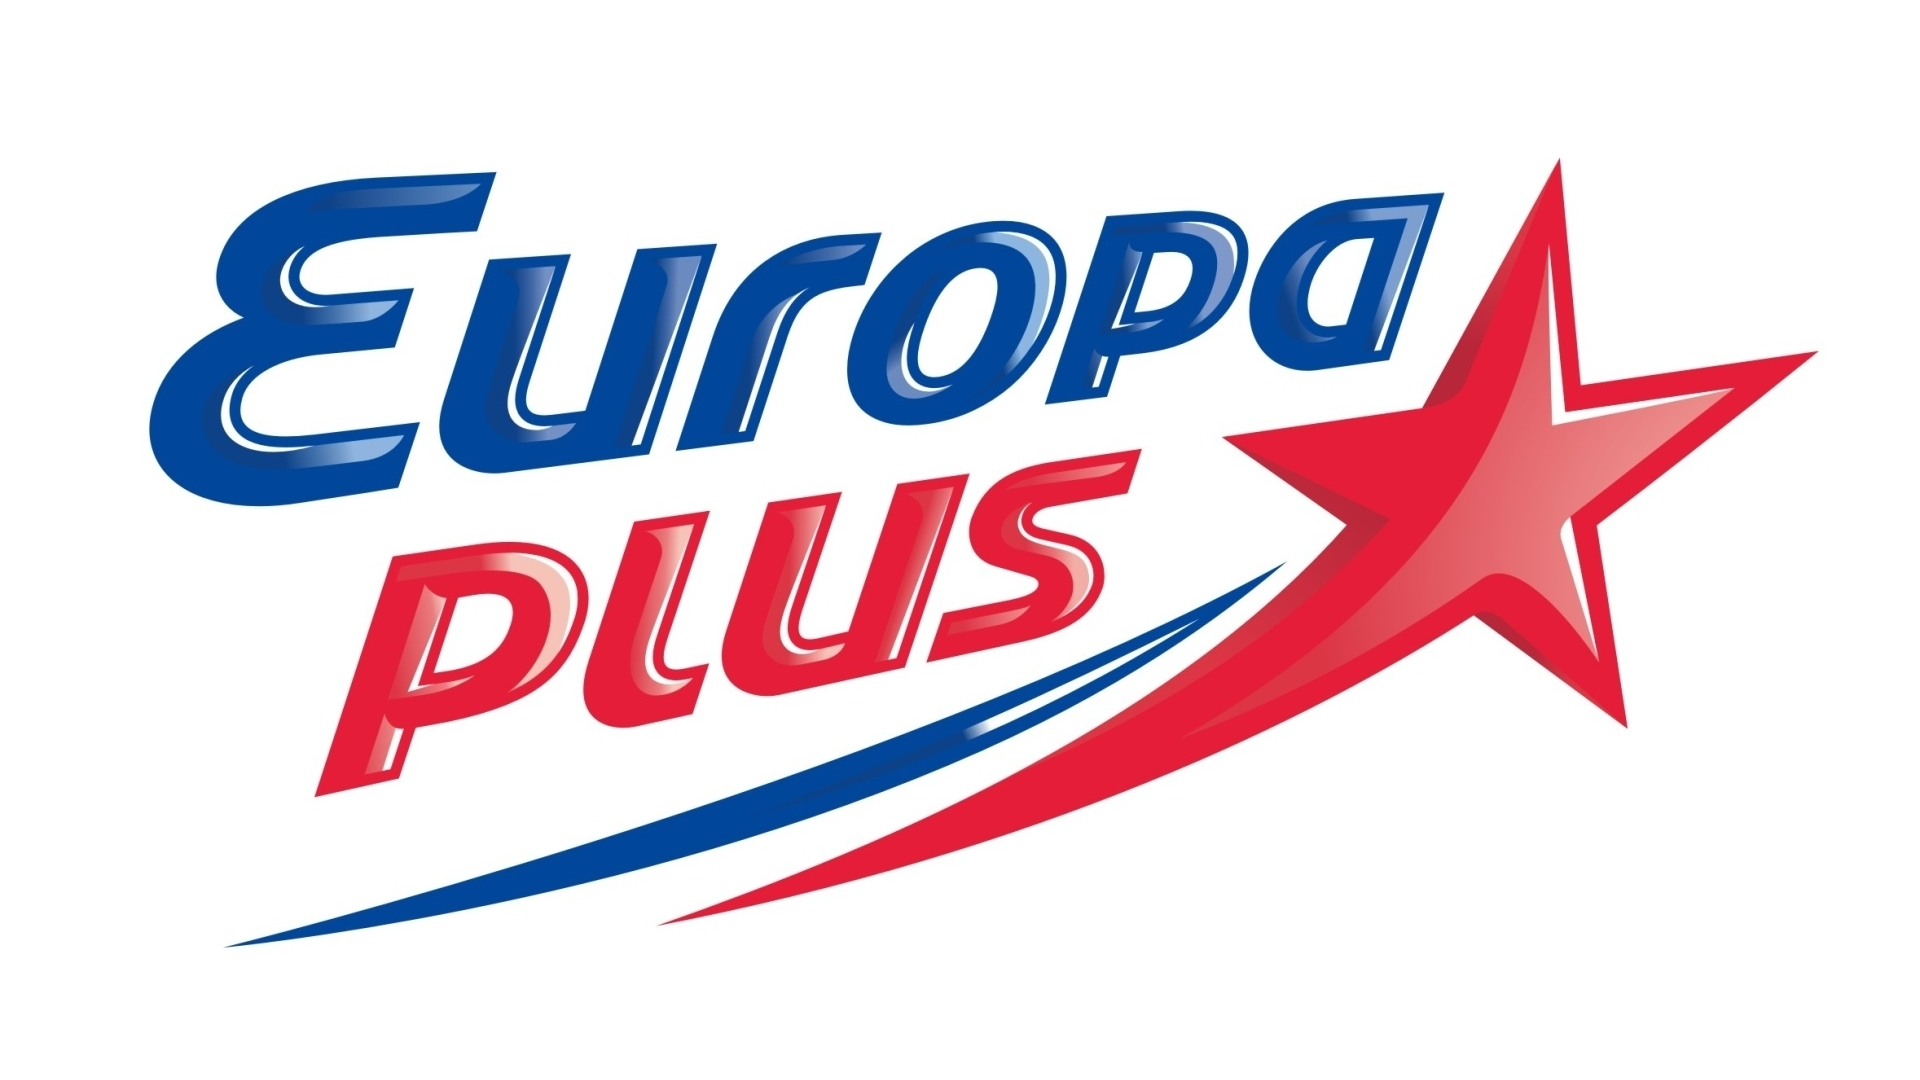 Чарты радио европа. Европа плюс логотип 1990. Европа Лис. Радио Европа плюс. Логотипы радиостанций.